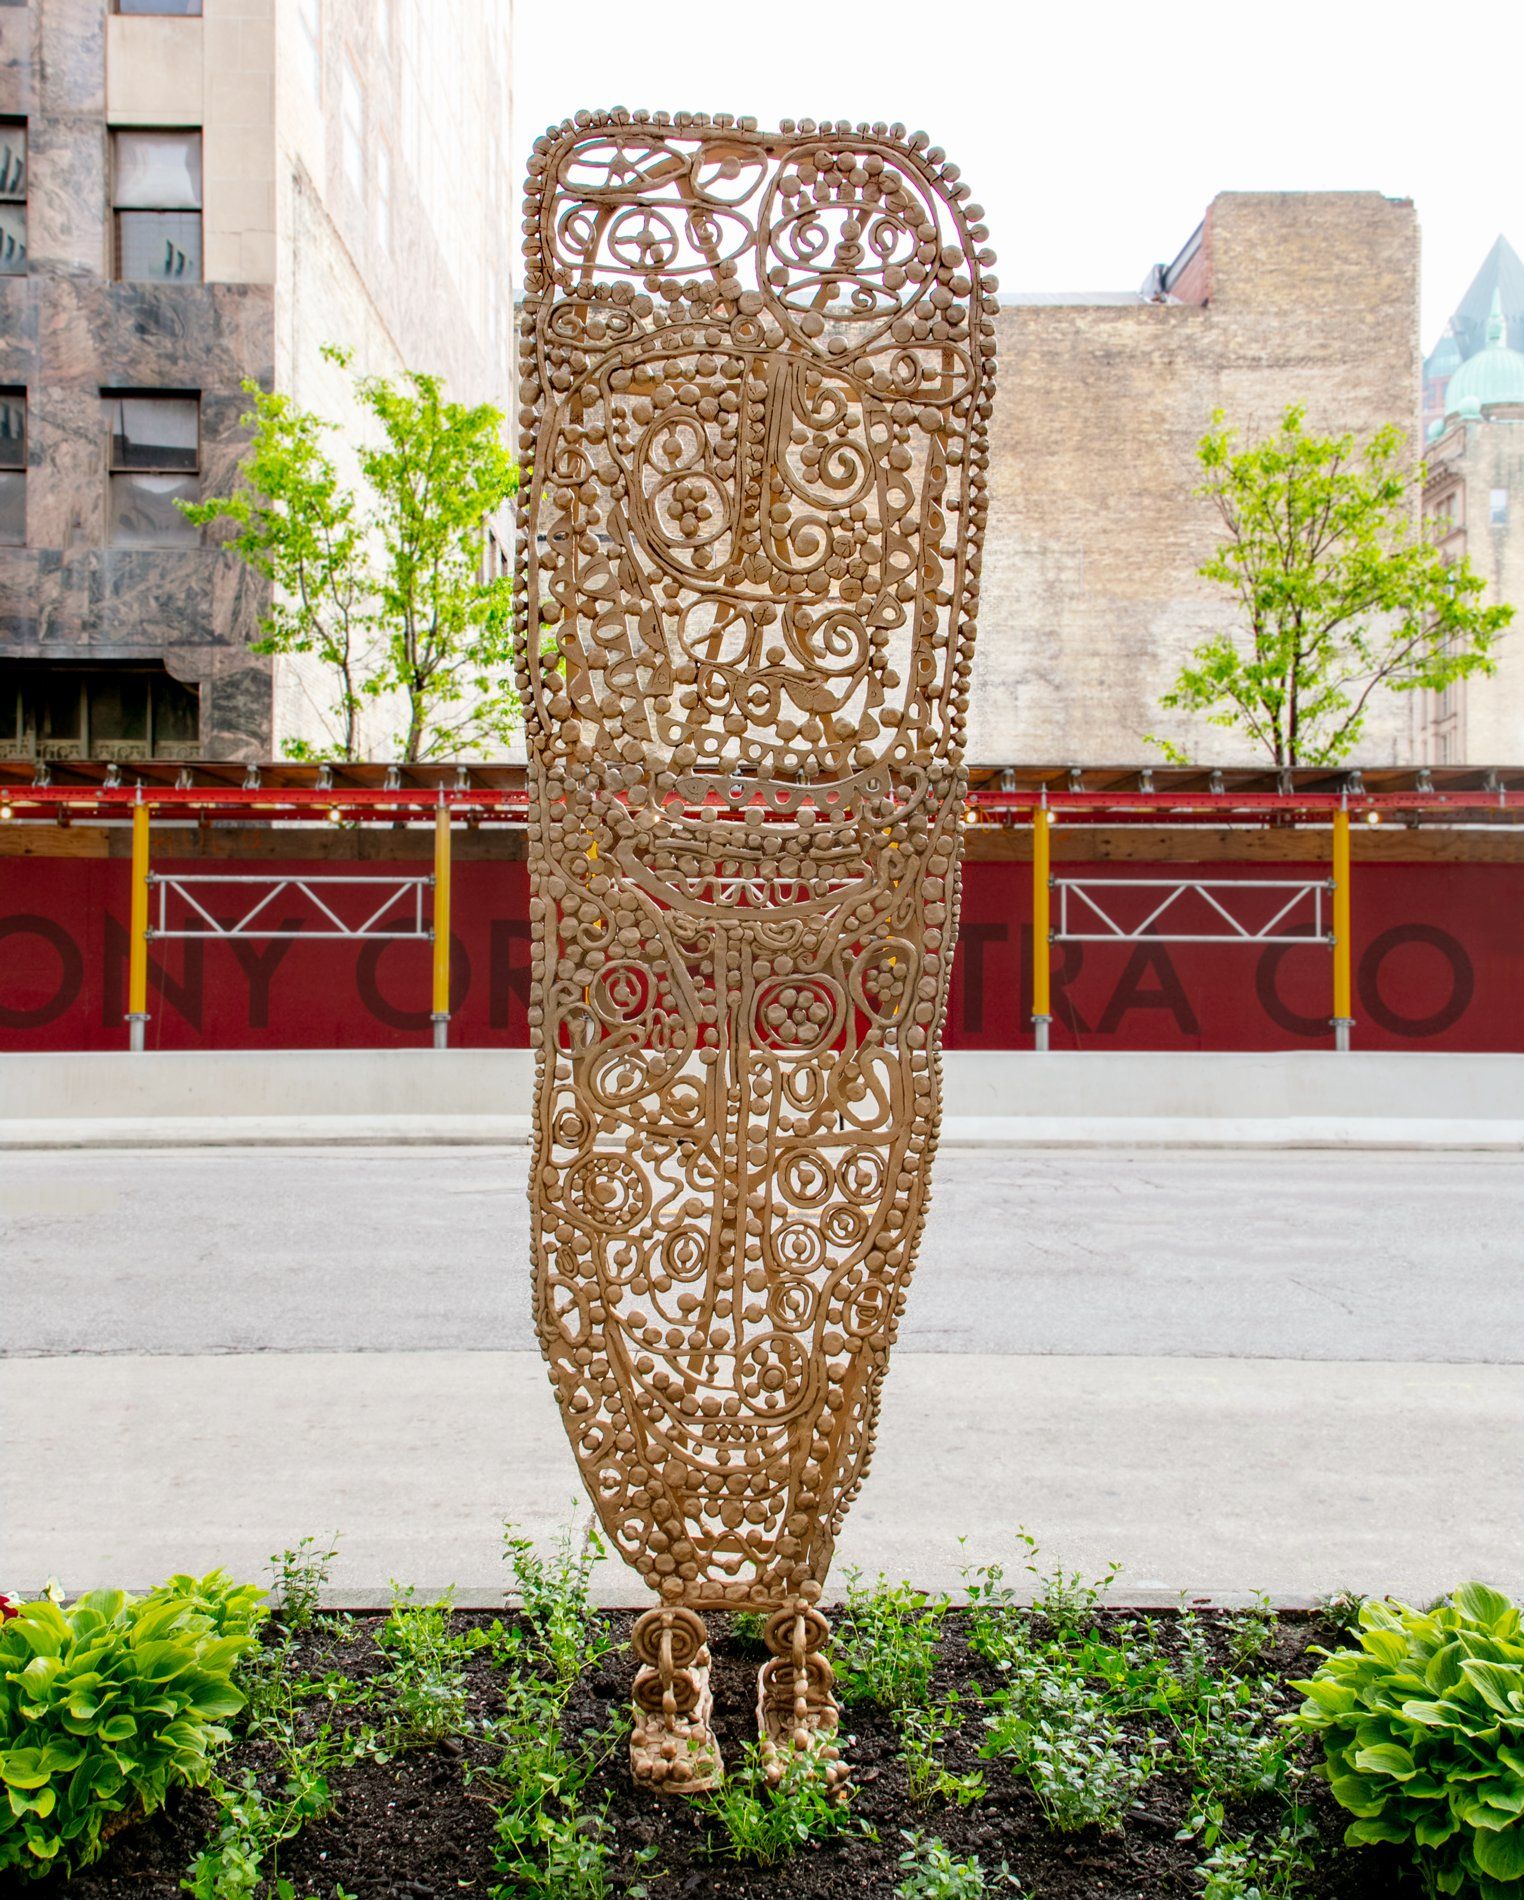 Radcliffe Bailey, Pensive, Sculpture Milwaukee 2019